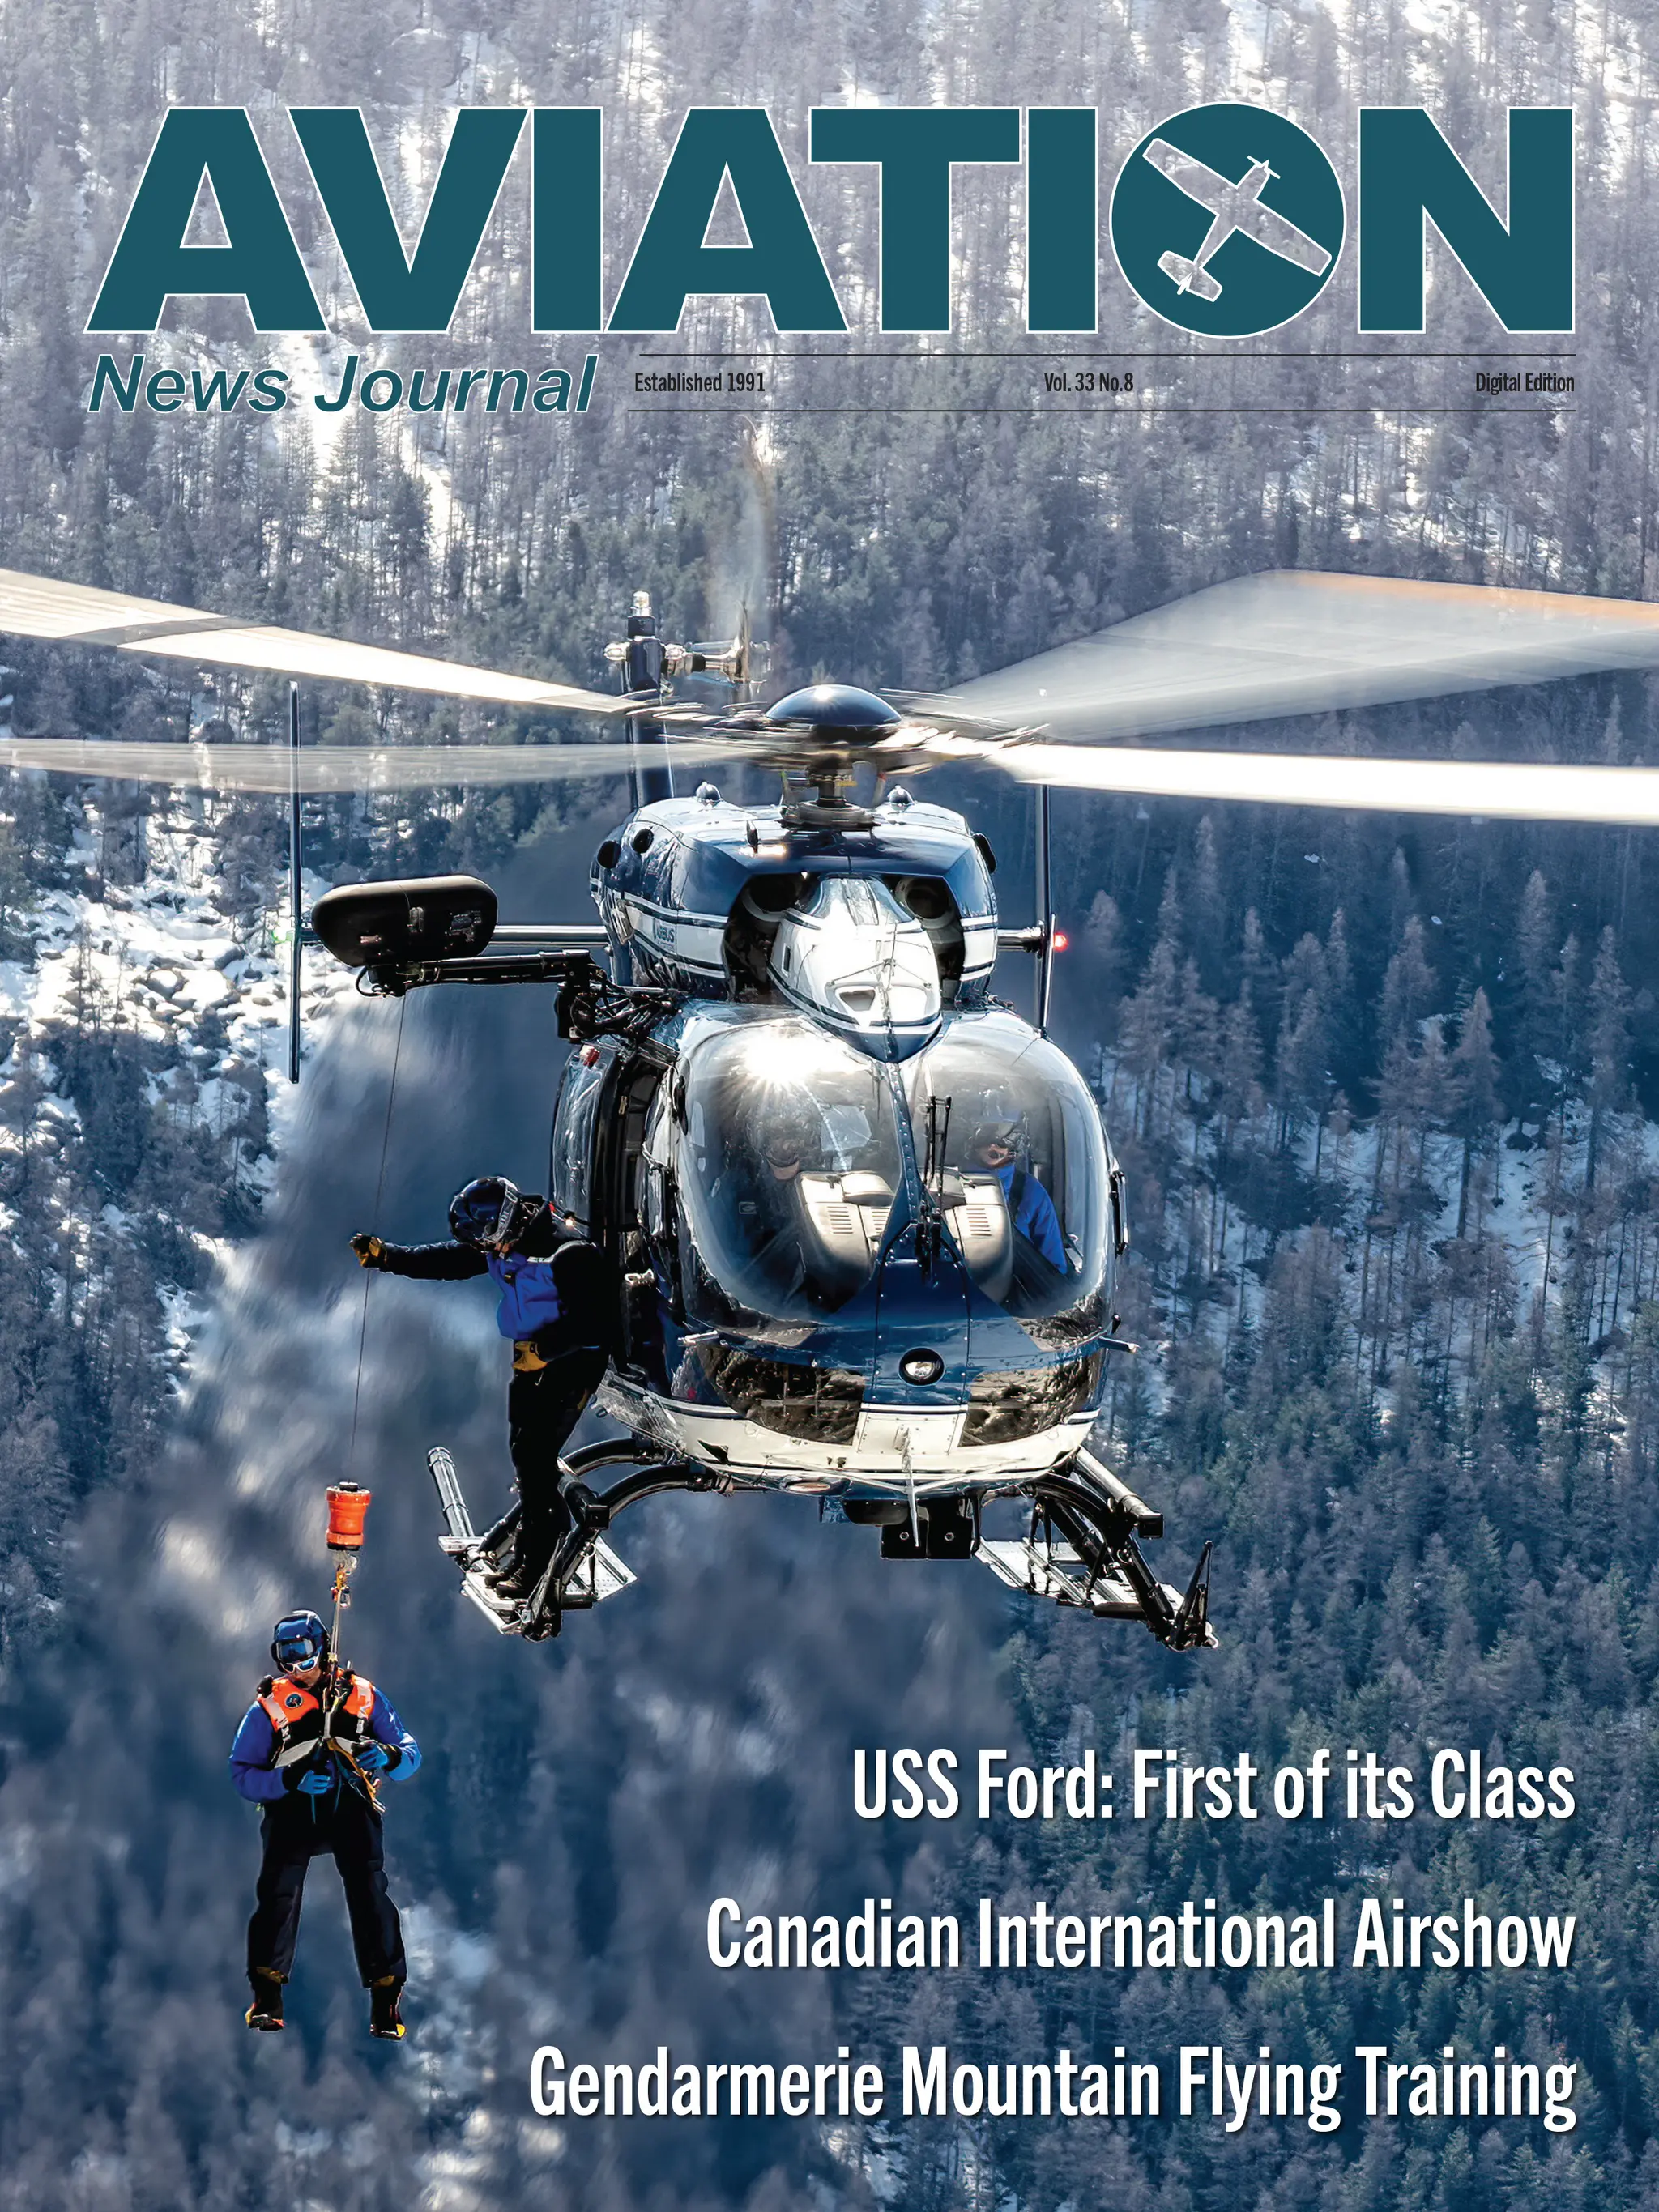 Aviation News Journal - Vol.33 No.8